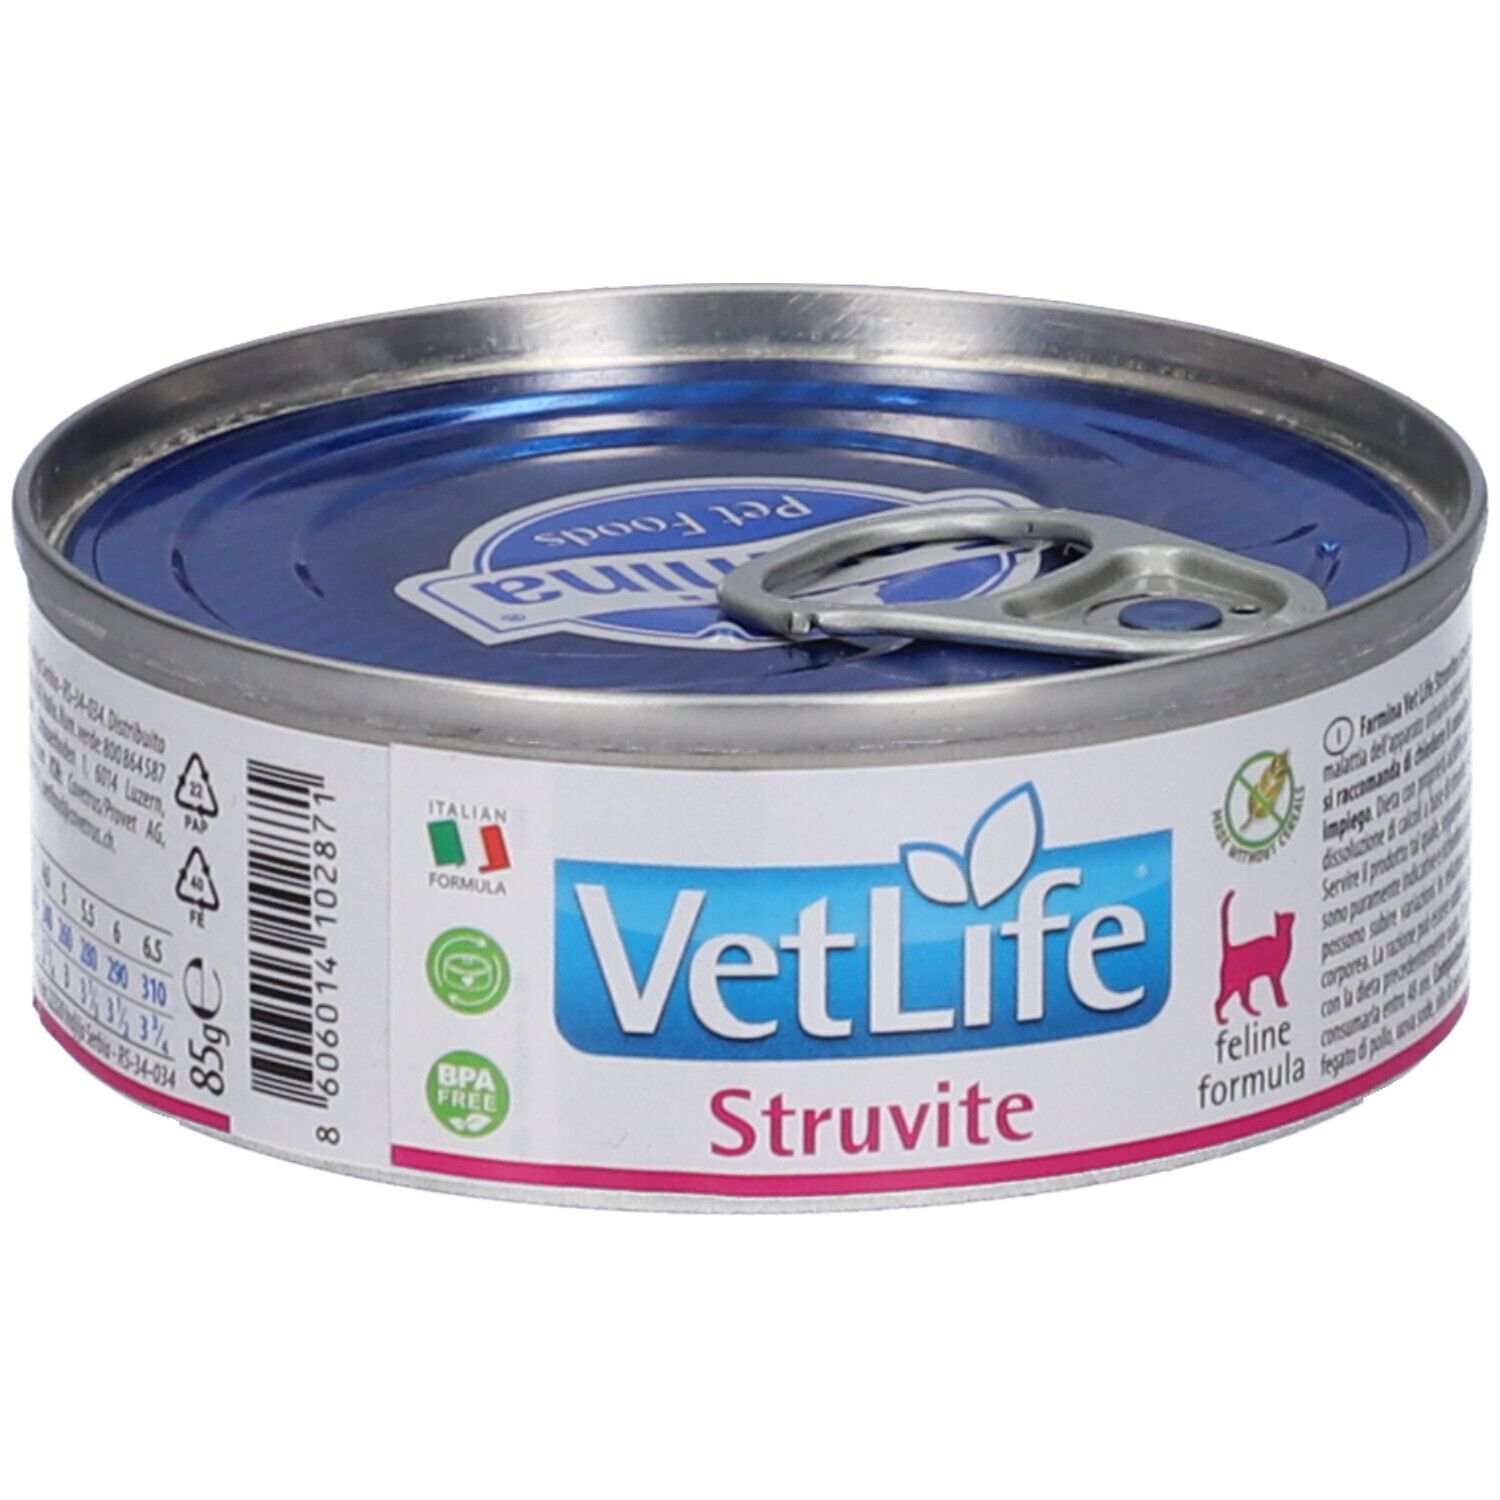 Farmina® VetLife Struvite Wet Food Feline